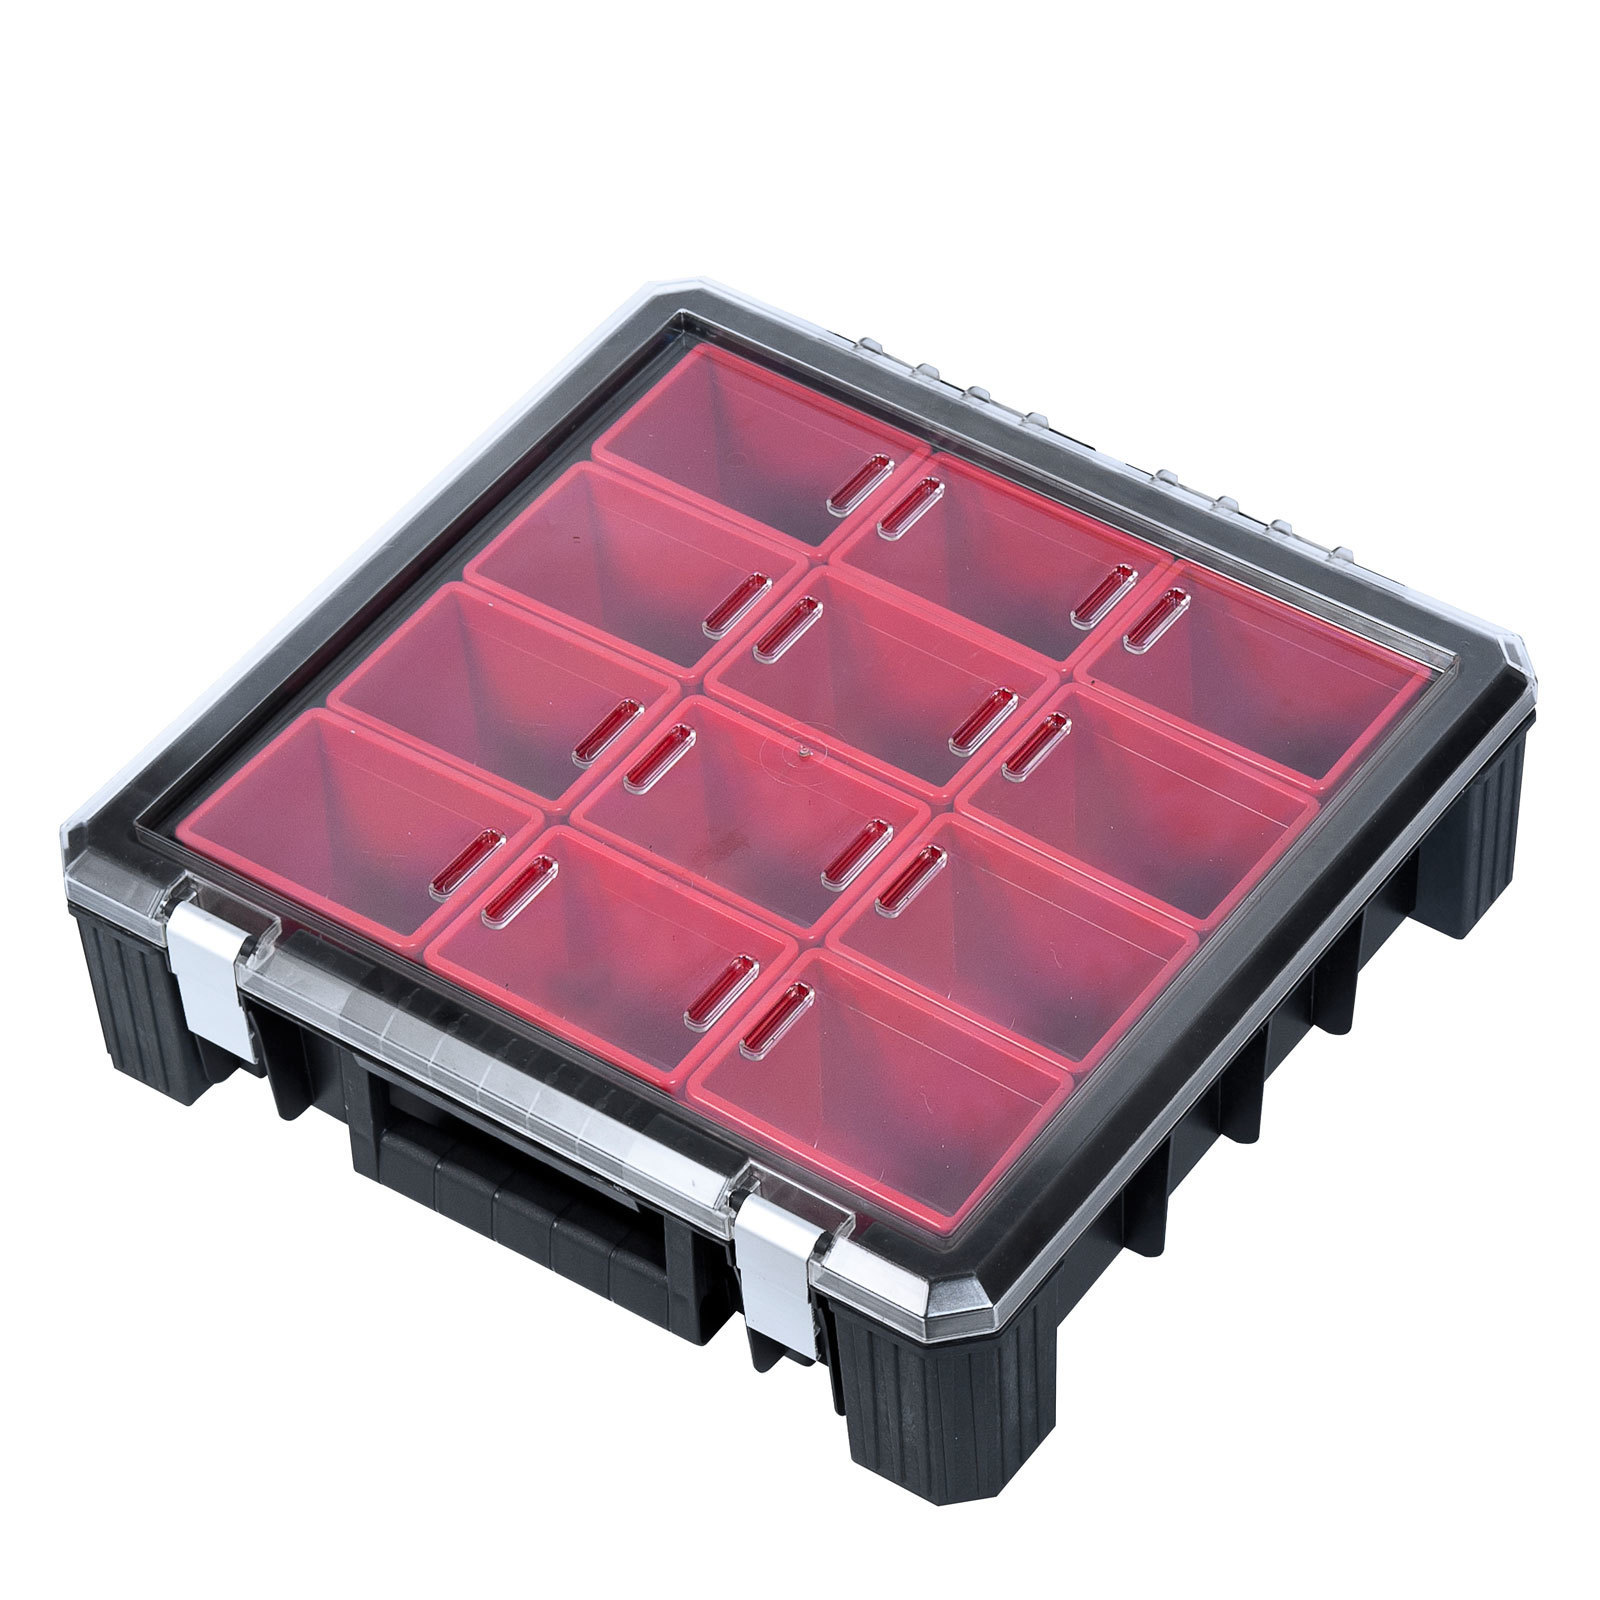 Sortierkasten mit 12 herausnehmbaren Boxen | HxBxT 11x39x40cm | Schwarz/Rot